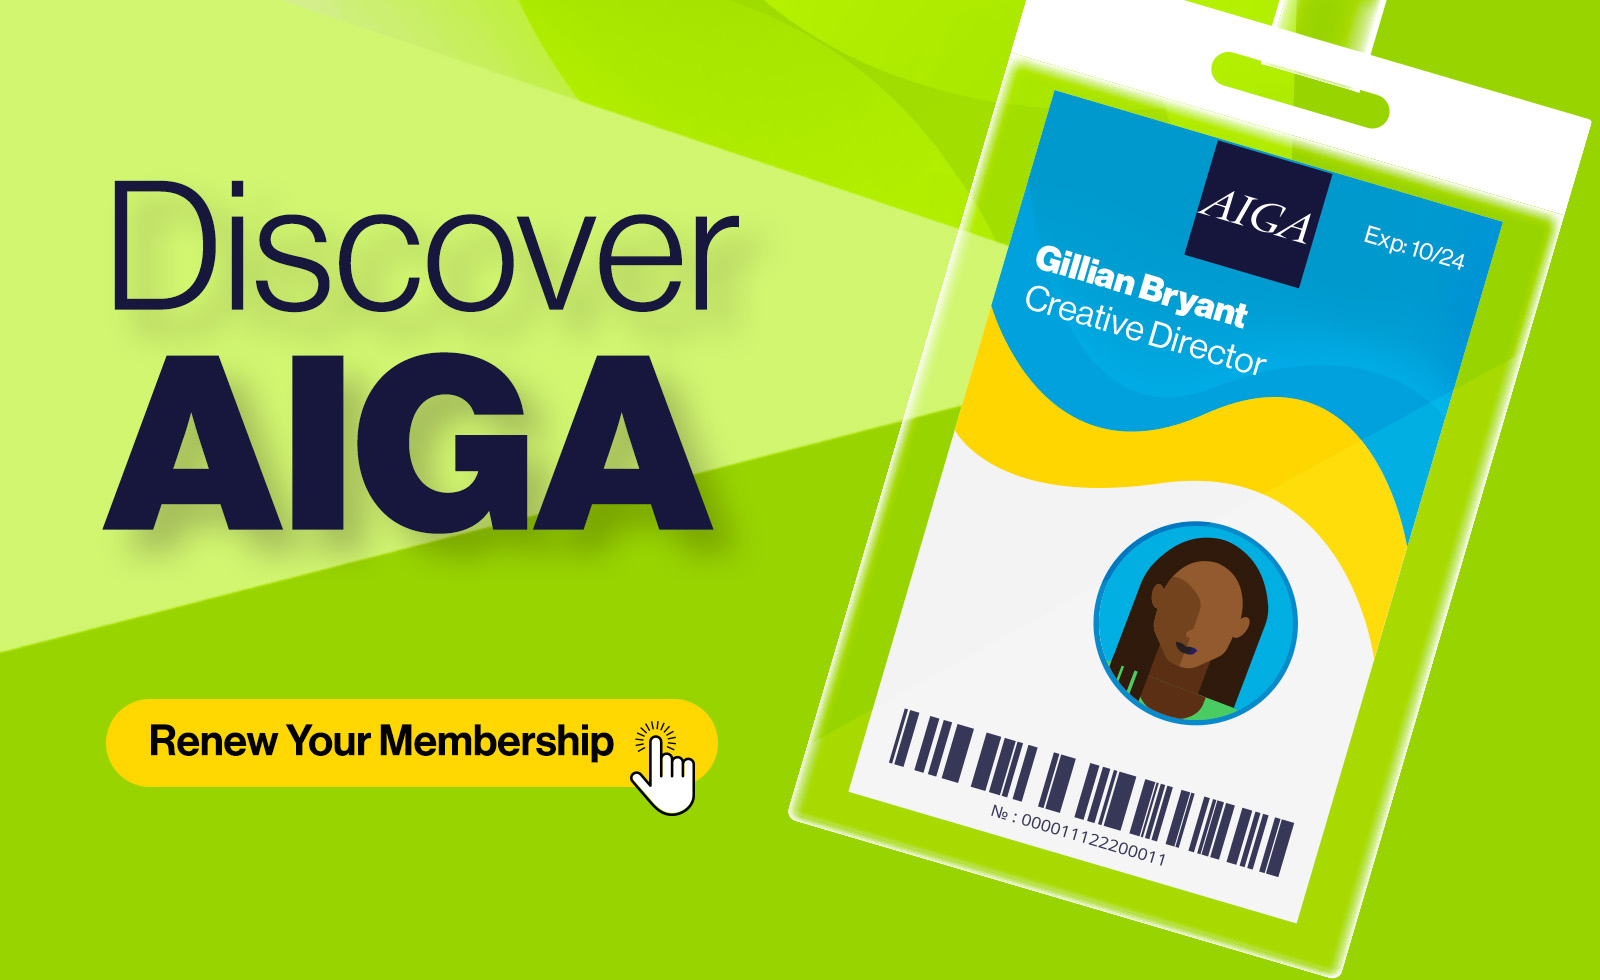 Discover AIGA - Renew Your Membership